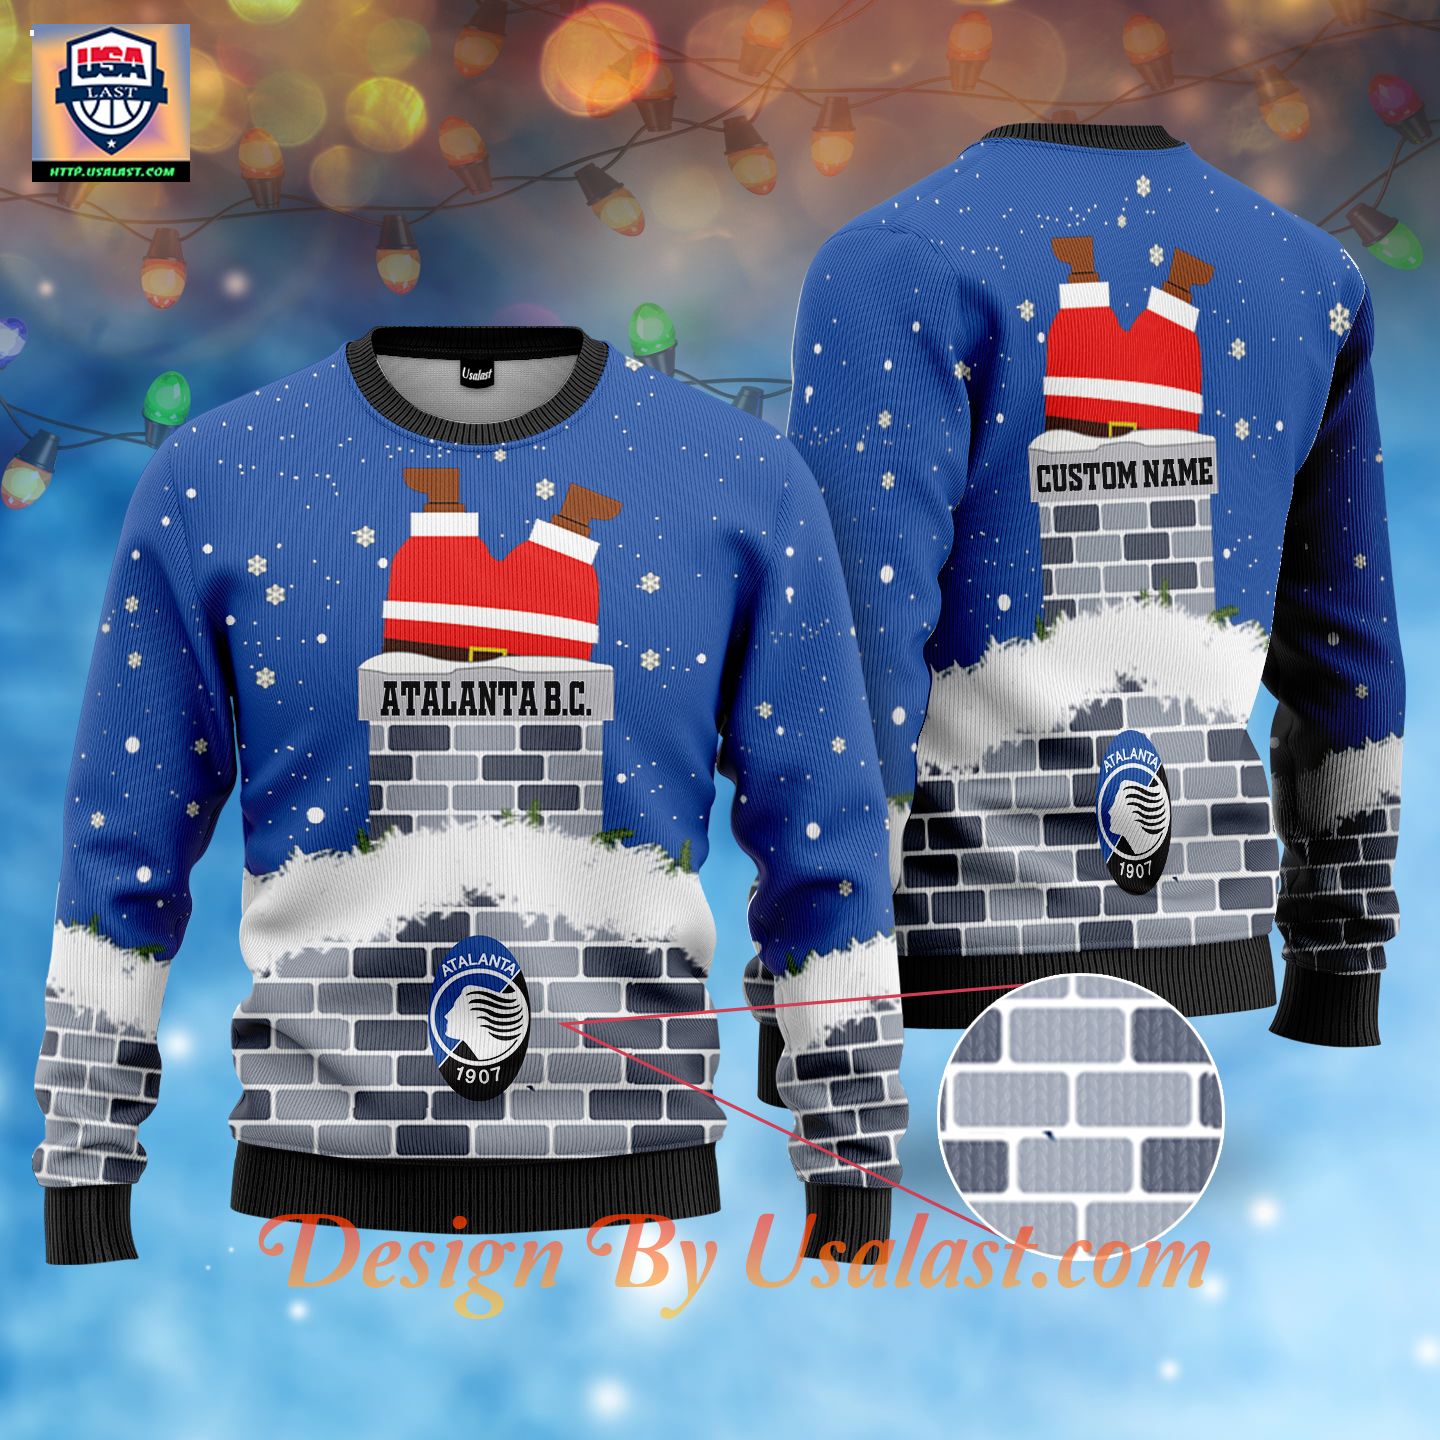 Available Atalanta B.C Santa Claus Custom Name Ugly Christmas Sweater